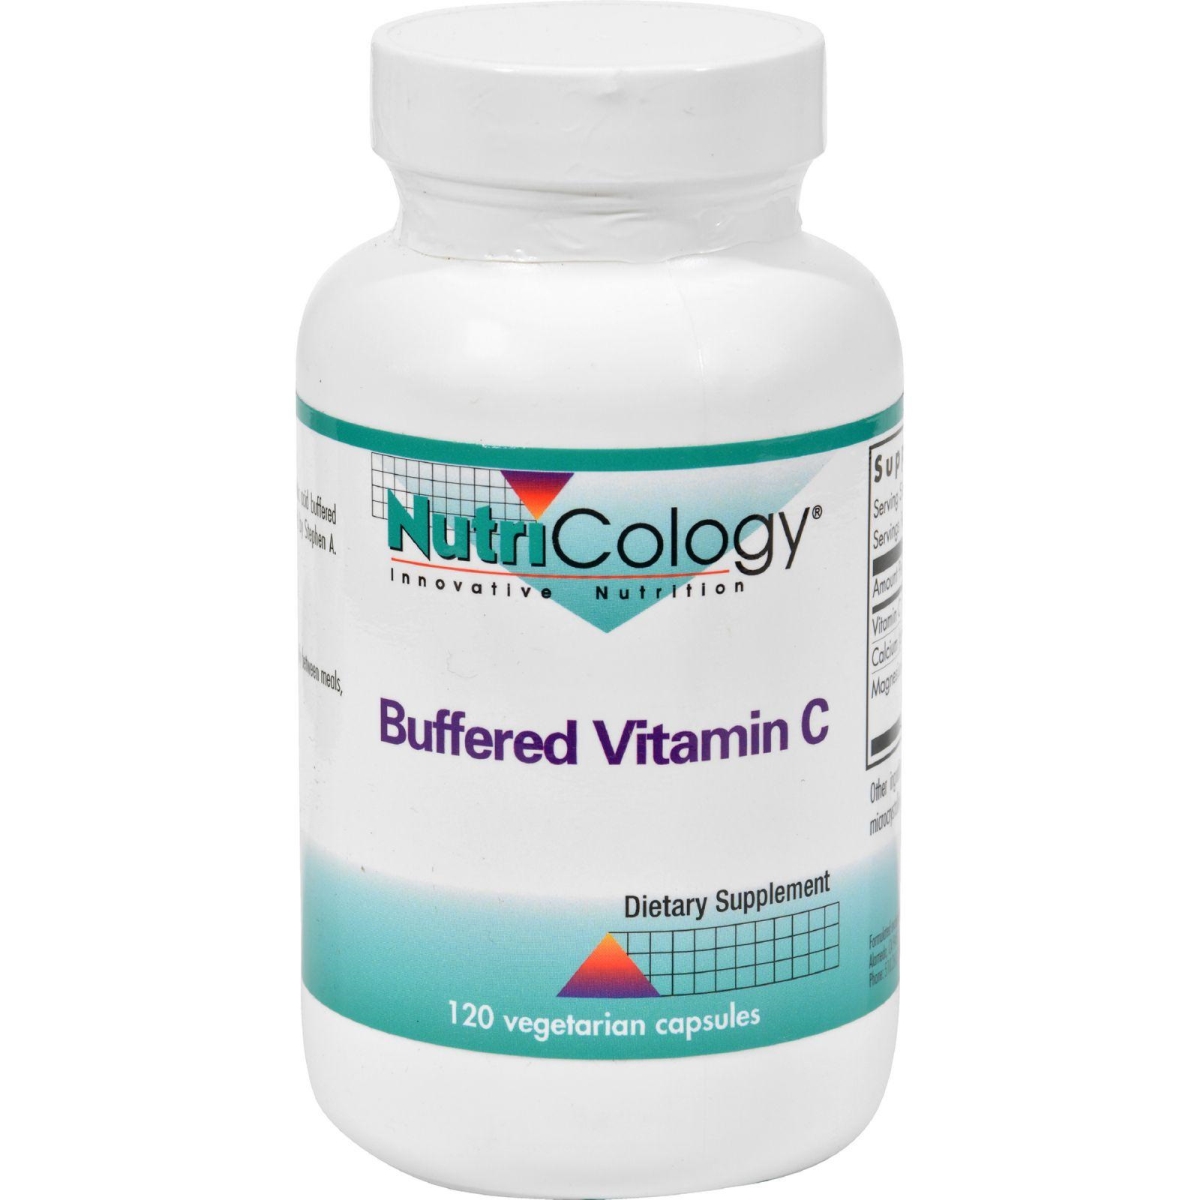 Hg0822064 Buffered Vitamin C - 120 Capsules